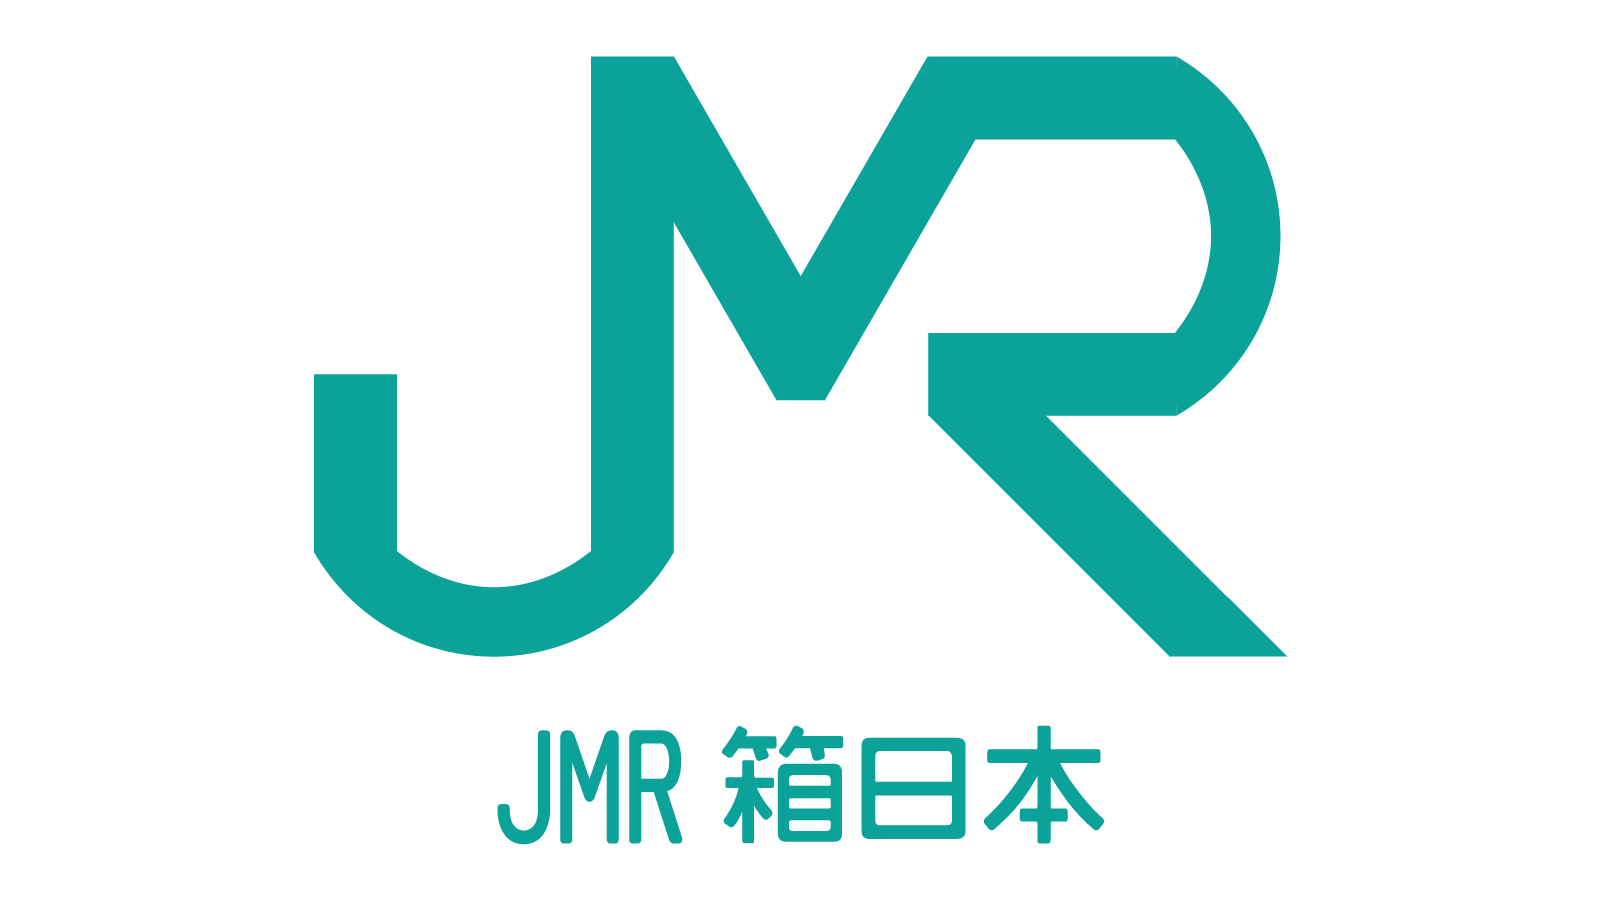 JMR箱日本マーク.png